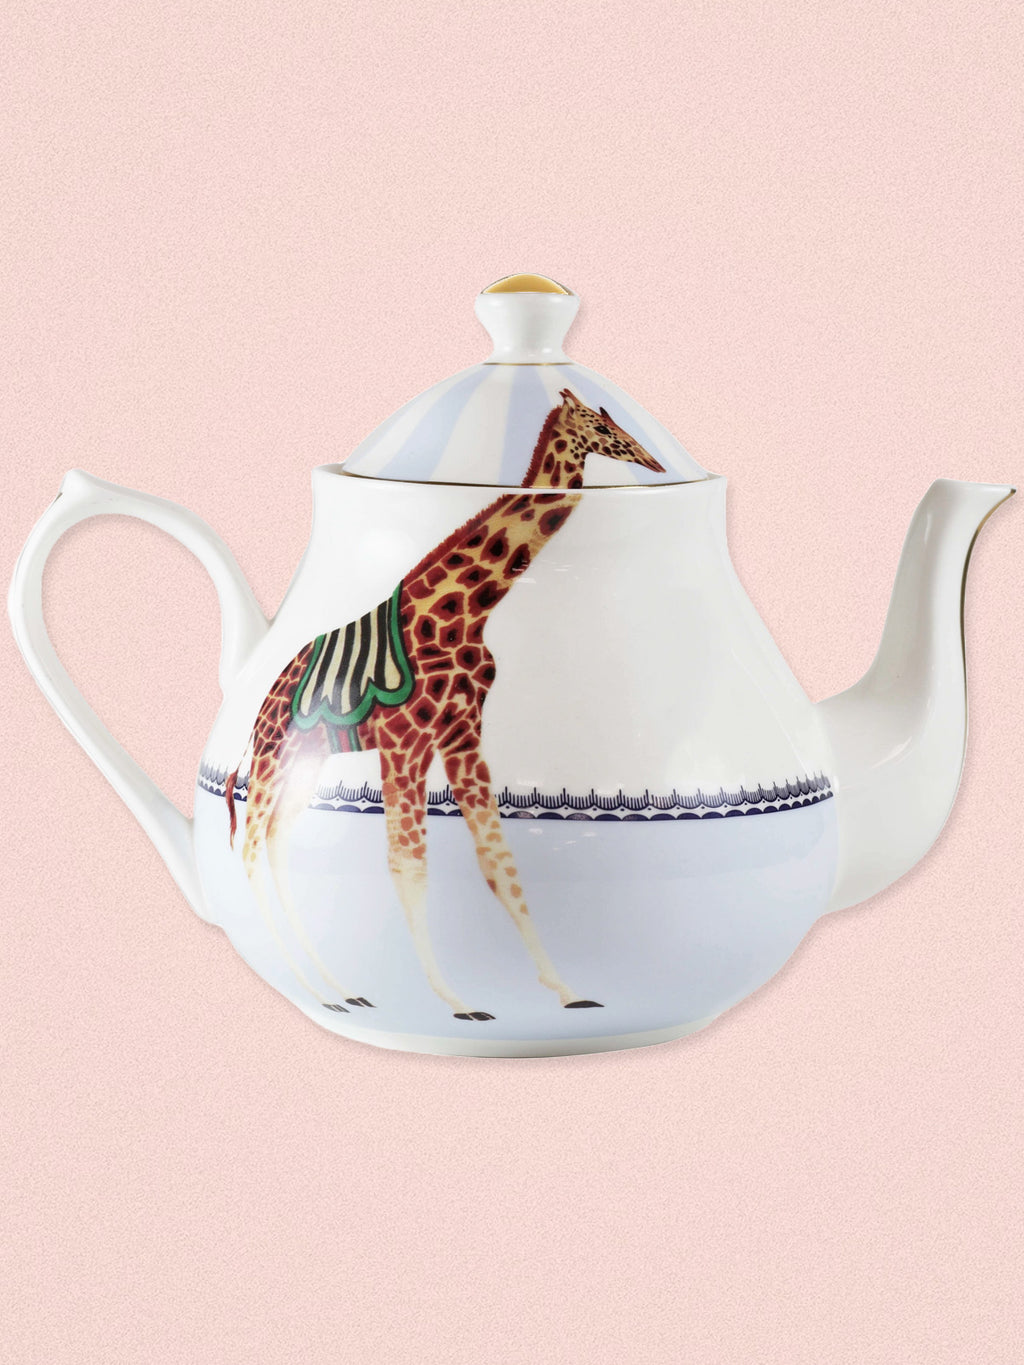 Yvonne Ellen 4 Cup Teapot - Giraffe